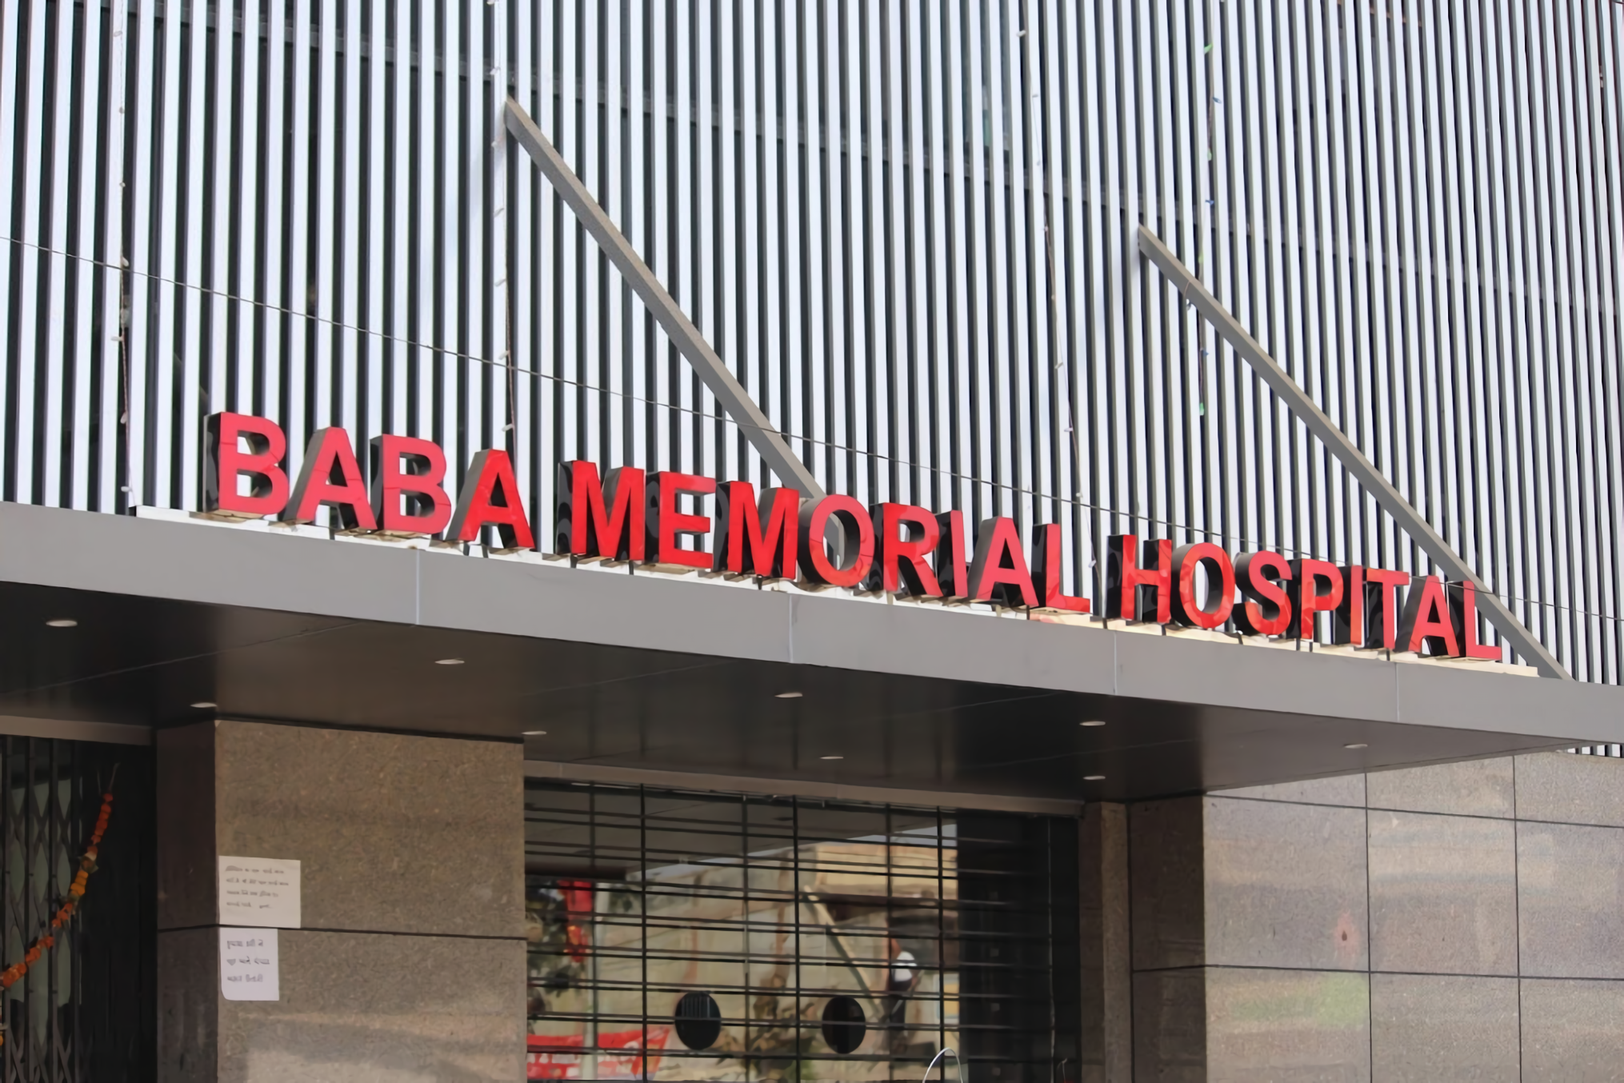 Baba Memorial Hospital